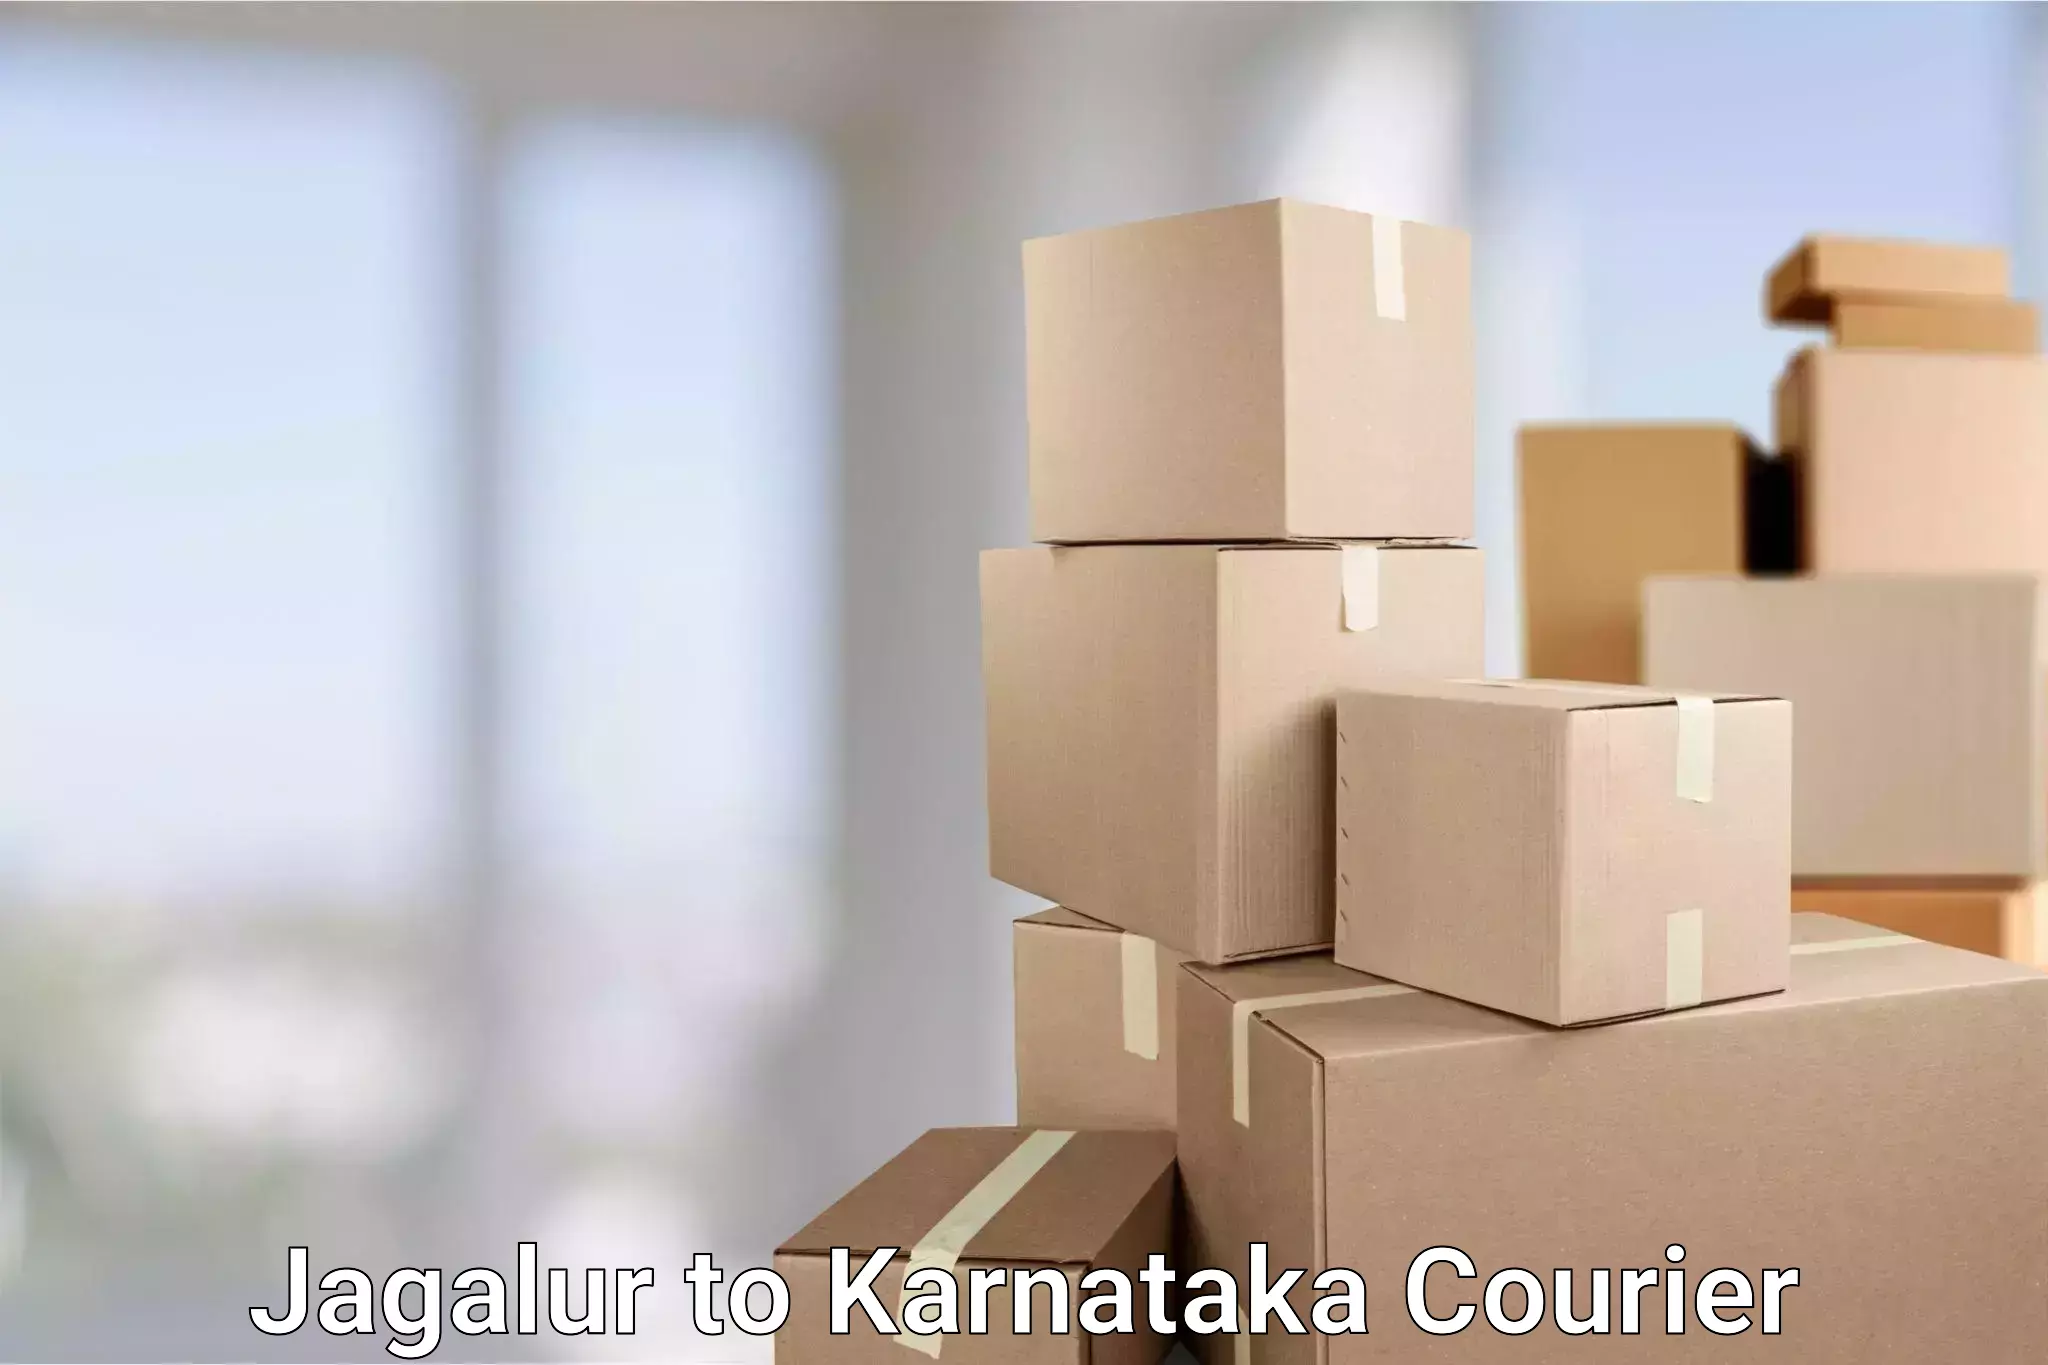 Full-service courier options Jagalur to Yenepoya Mangalore